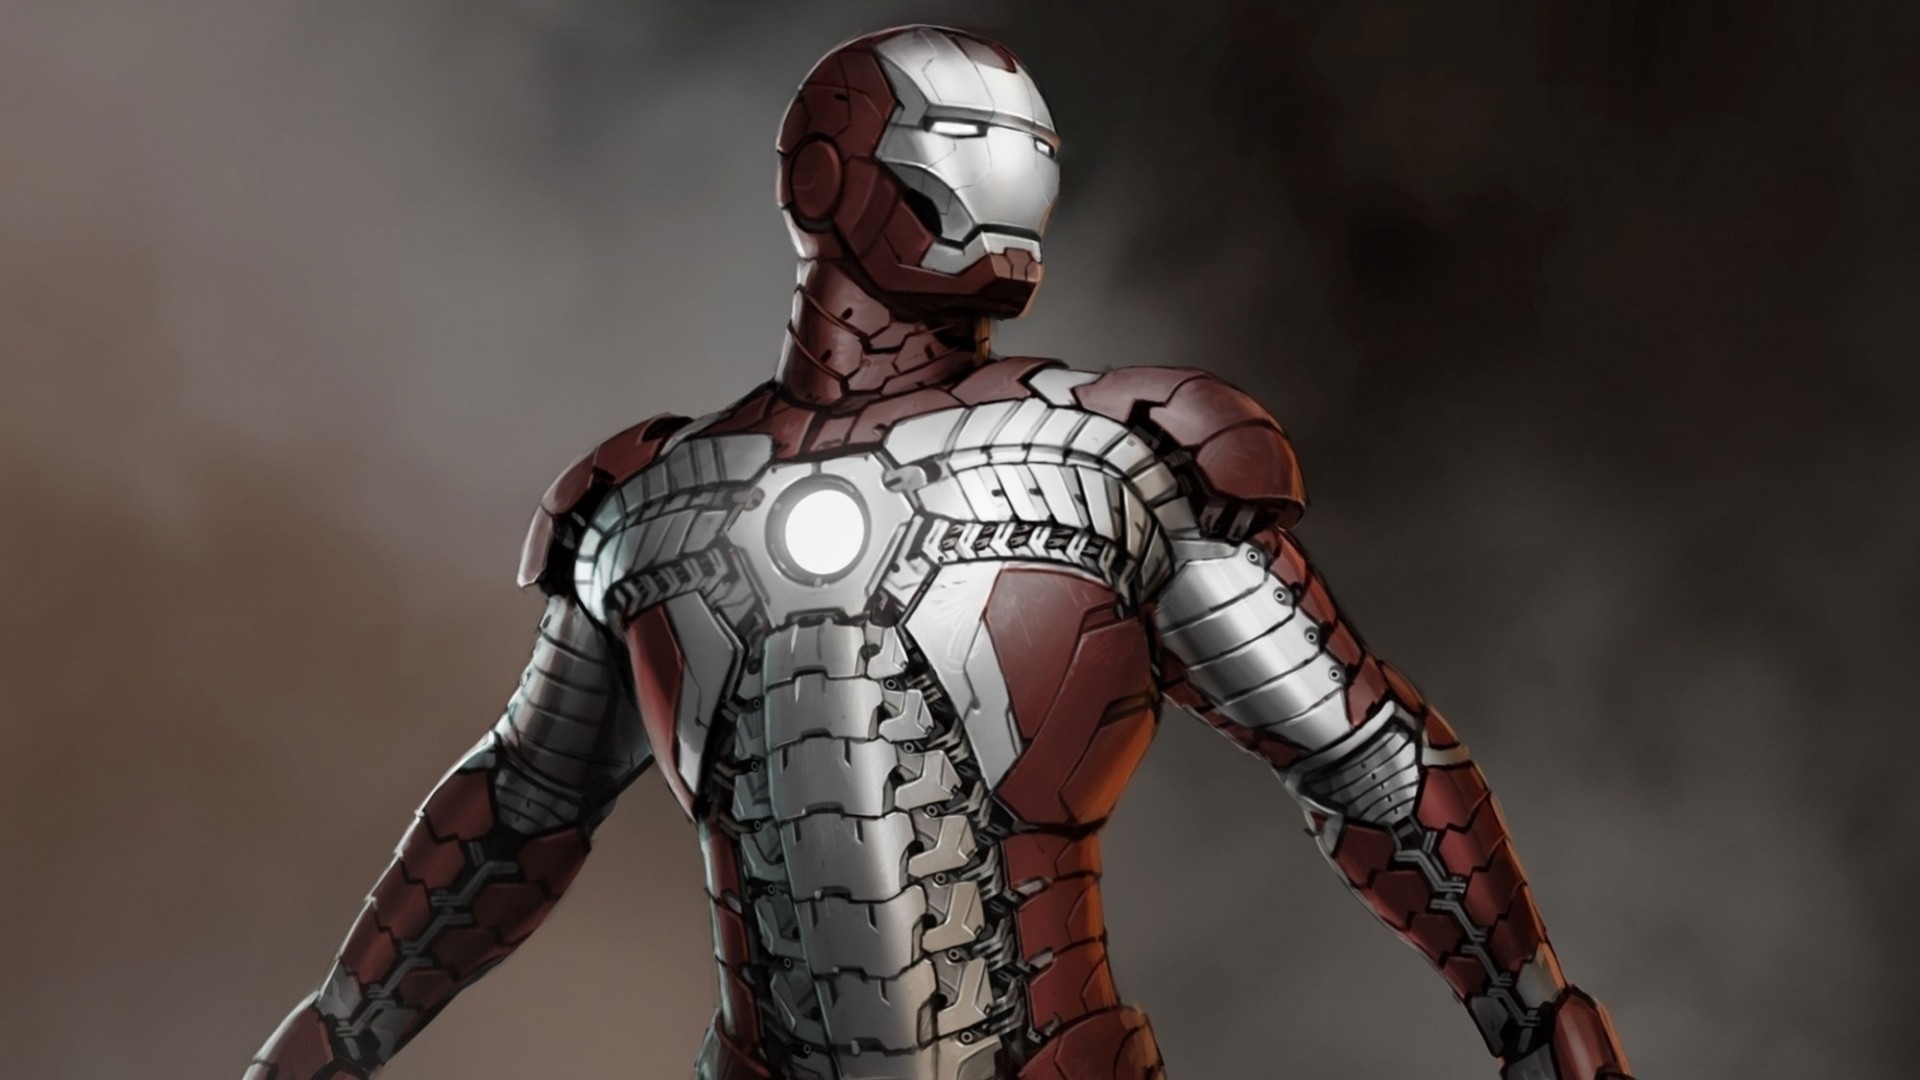 48+] Iron Man HD Wallpapers 1080p - WallpaperSafari